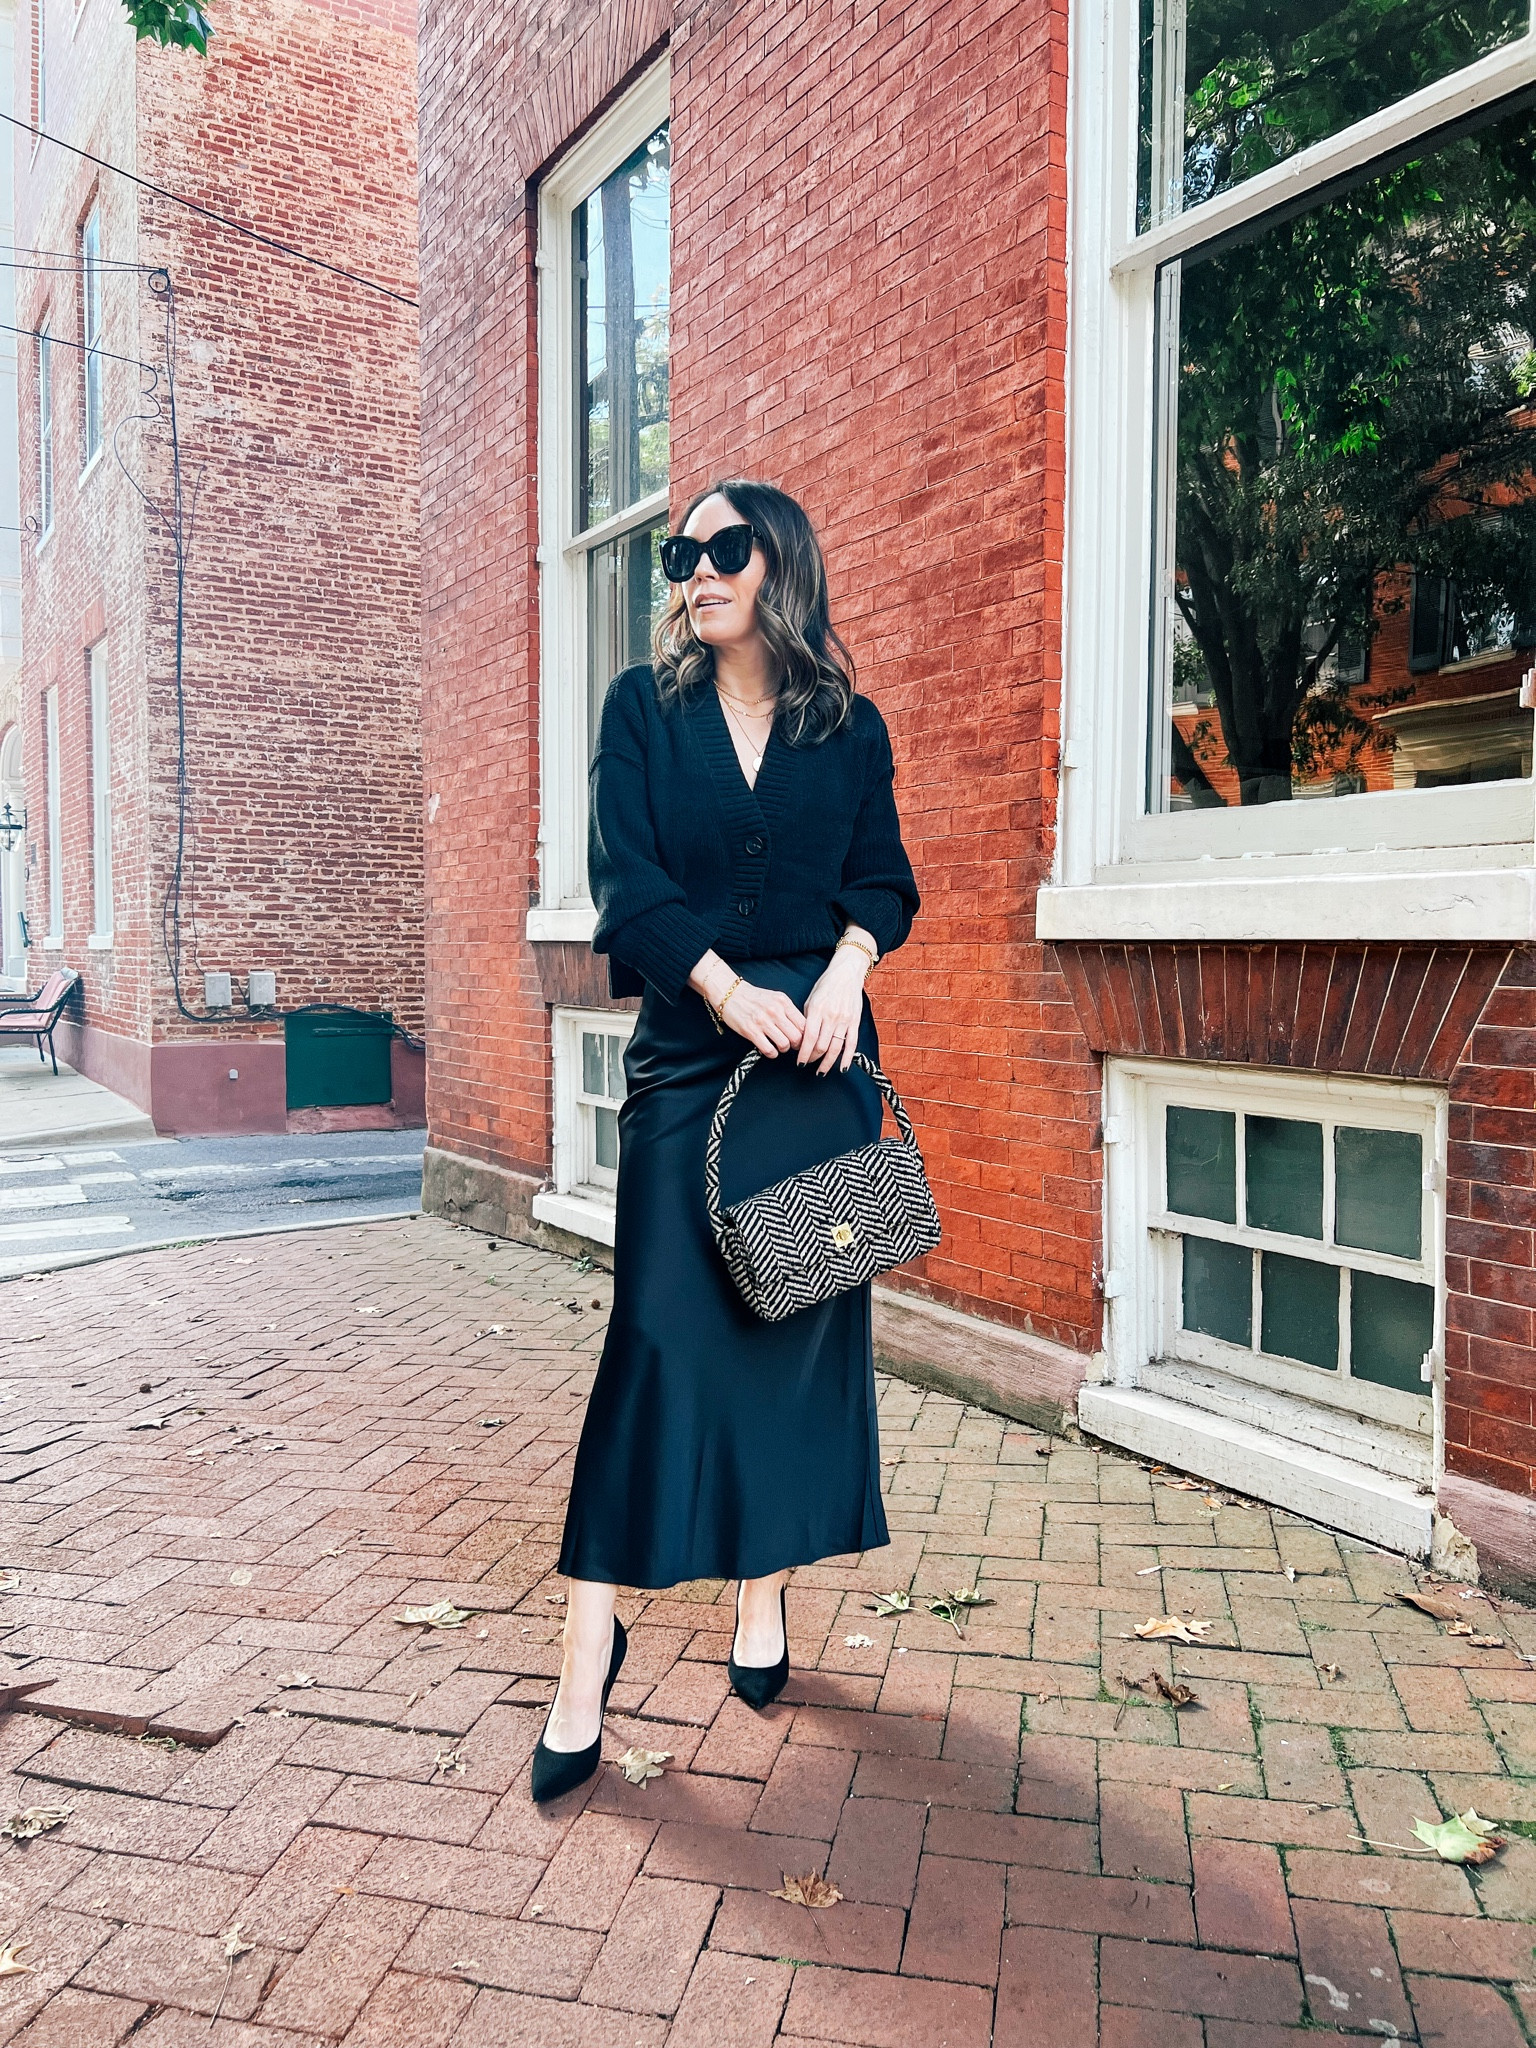 How to Style the Melie Bianco Brigitte Shoulder Bag - alittlebitetc